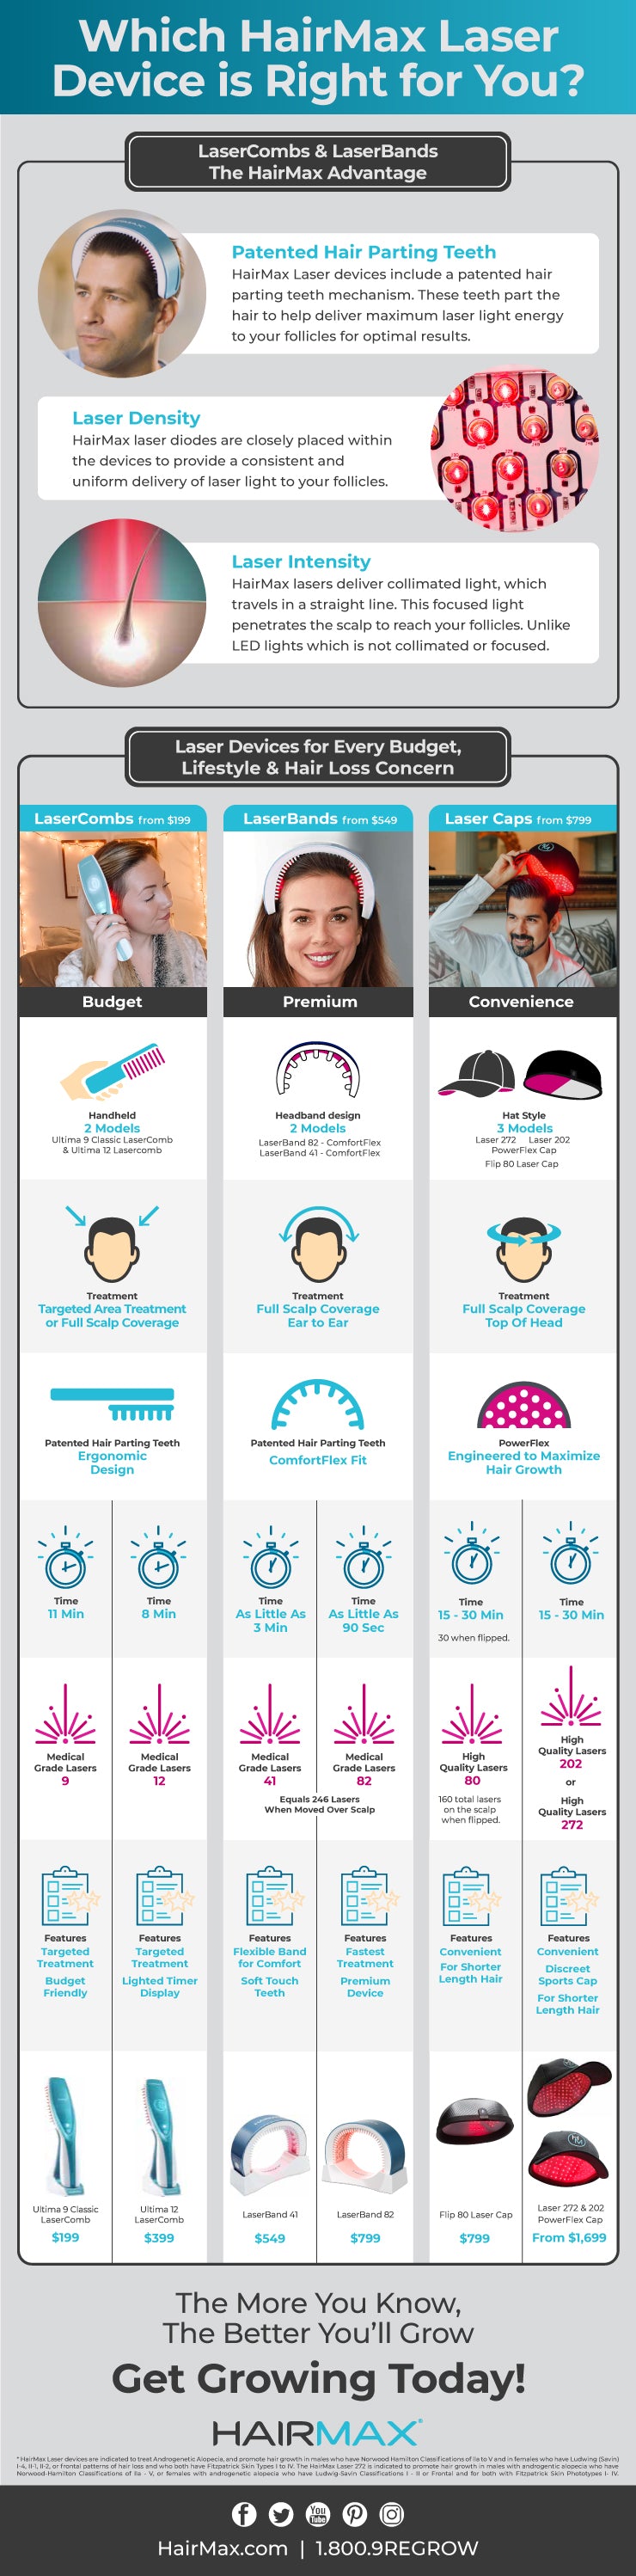 HairMax Infographic 